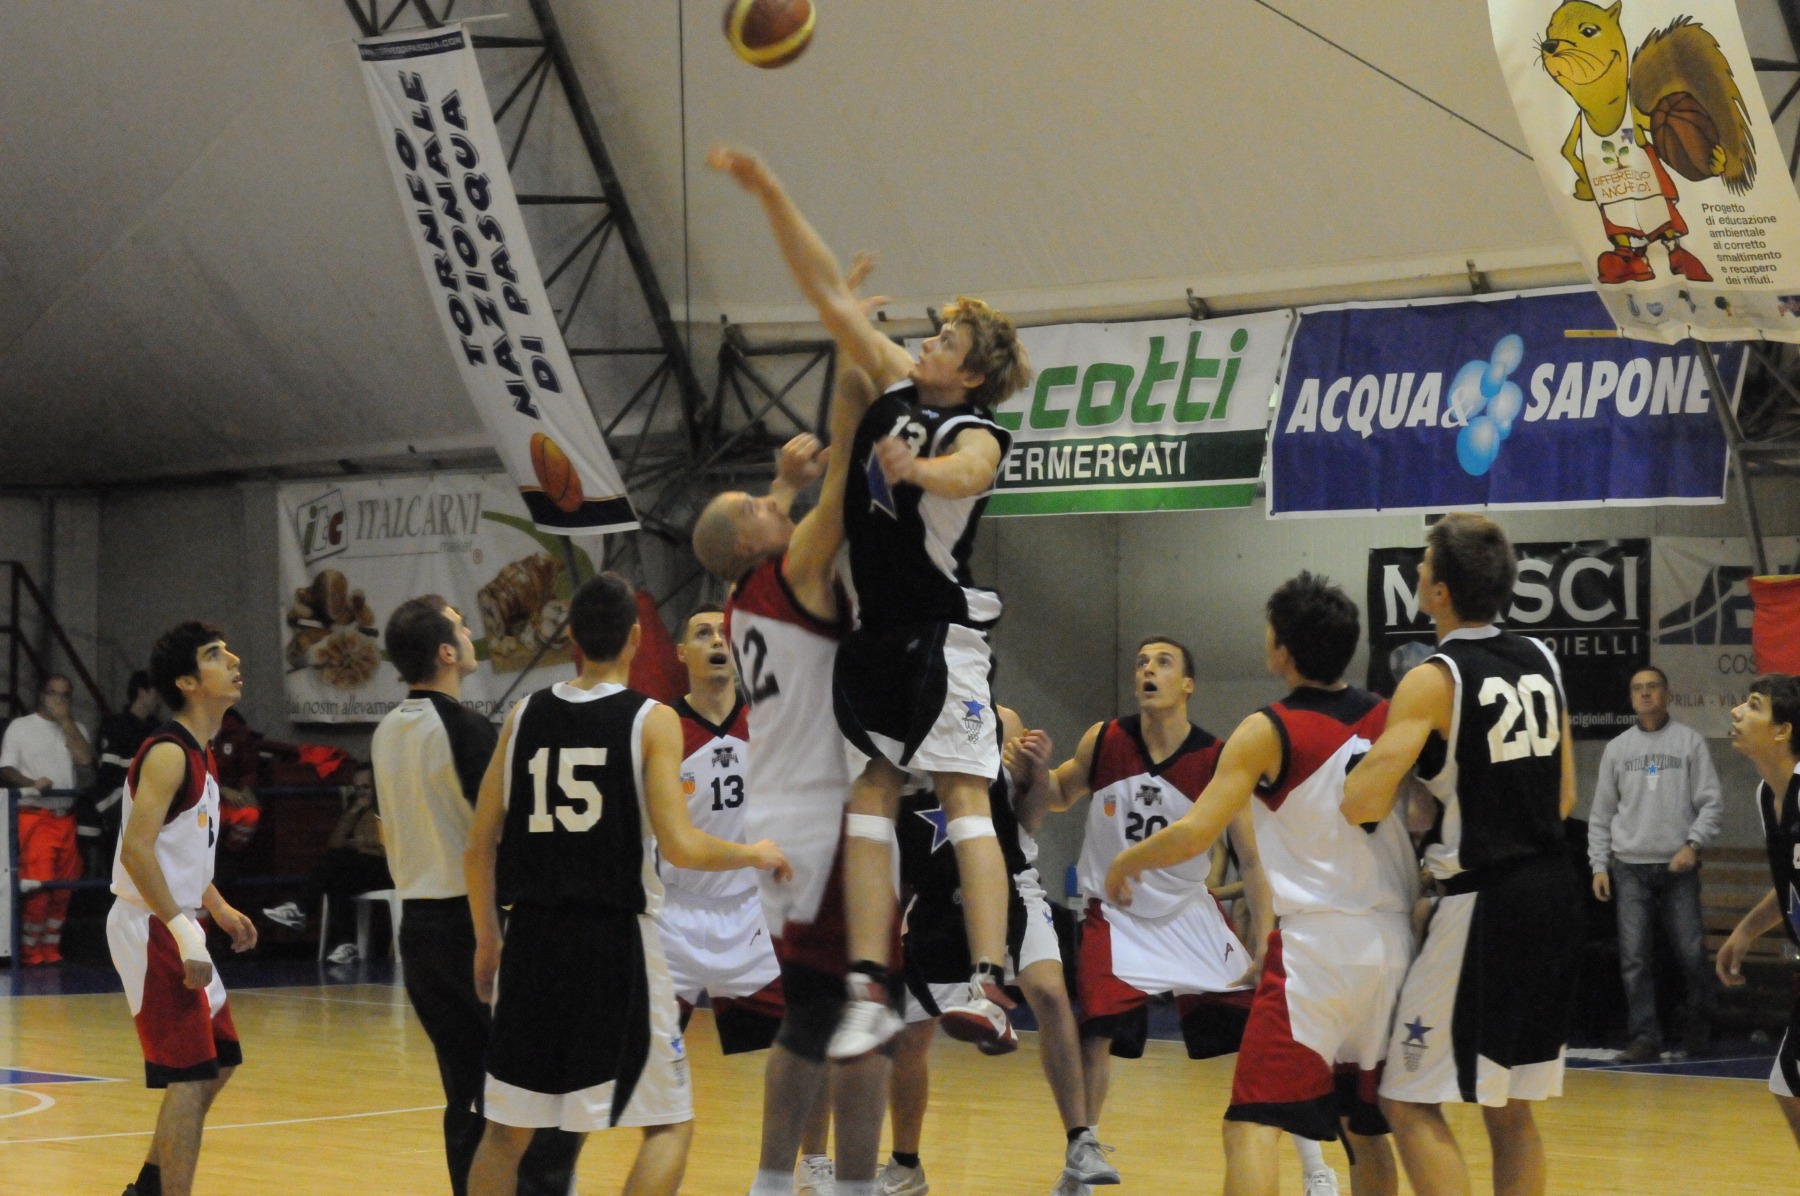 2011-11-27 CGold Virtus Basket Aprilia - Minerva Basket Roma